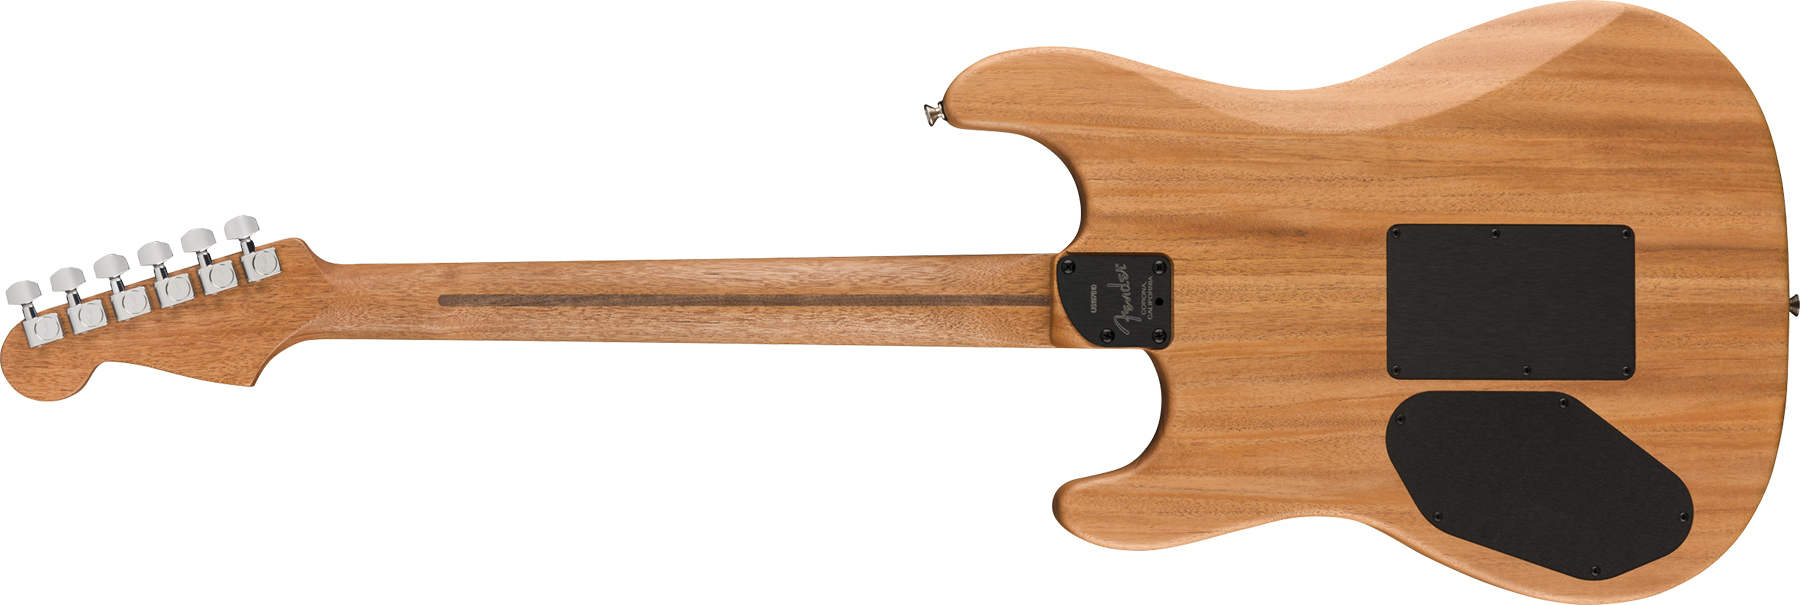 Fender American Acoustasonic Strat Usa Eb - Natural - Elektroakustische Gitarre - Variation 1